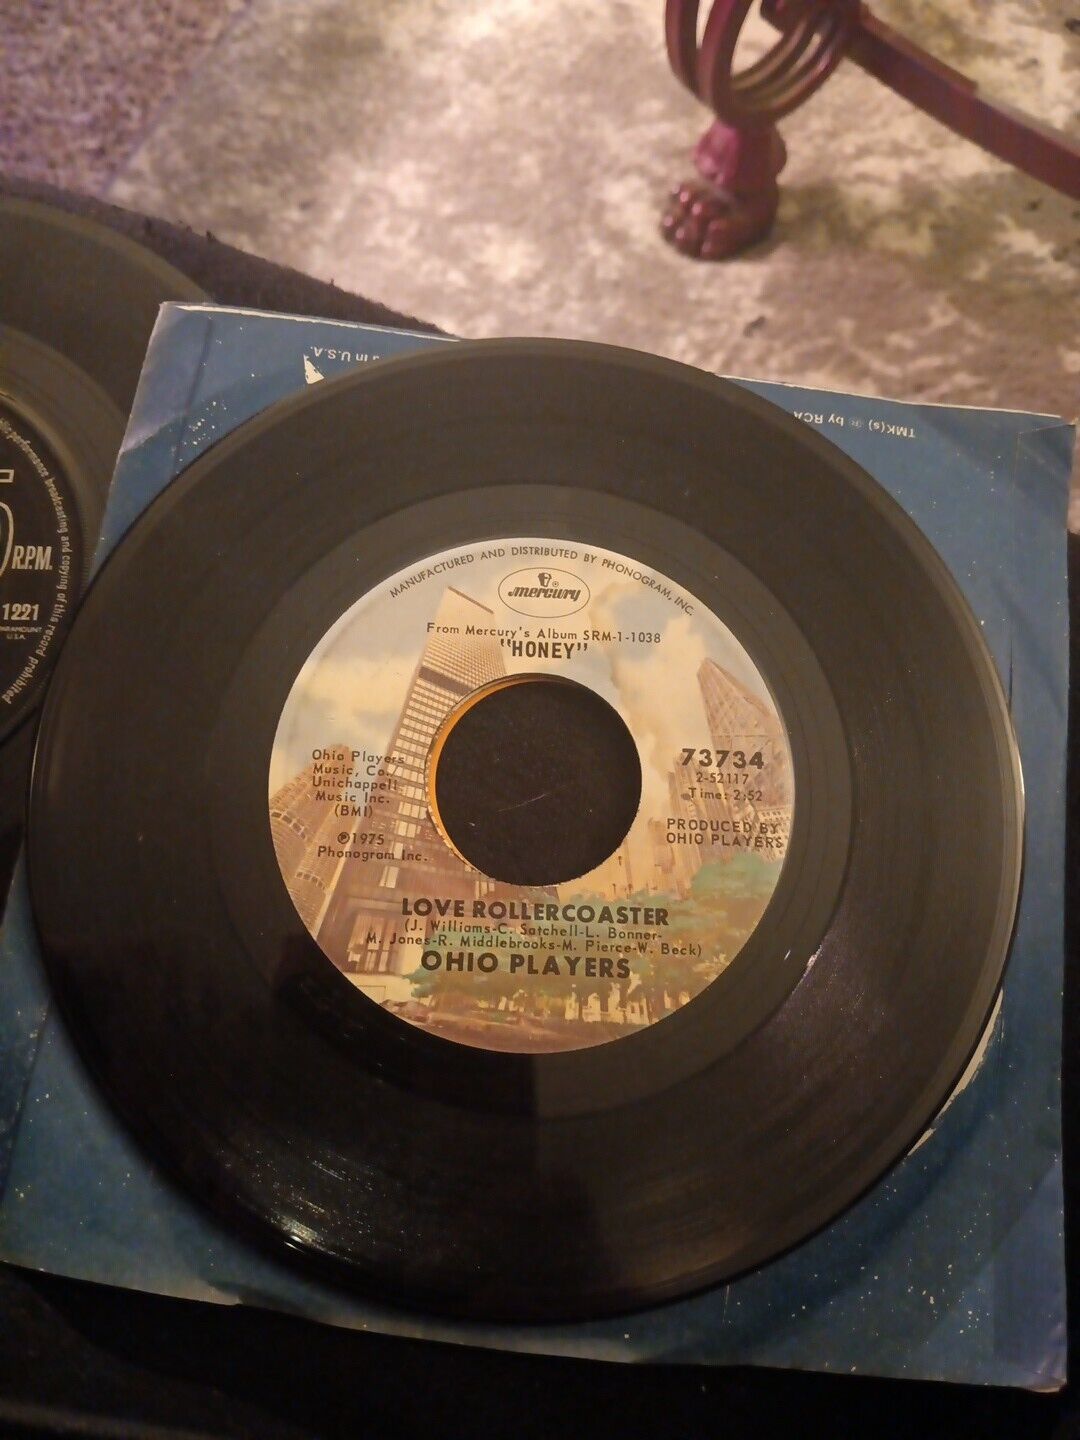 Vintage Record, OHIO PLAYERS: LOVE ROLLERCOASTER, 45 rpm, 1975, R&B, Funk, Disco